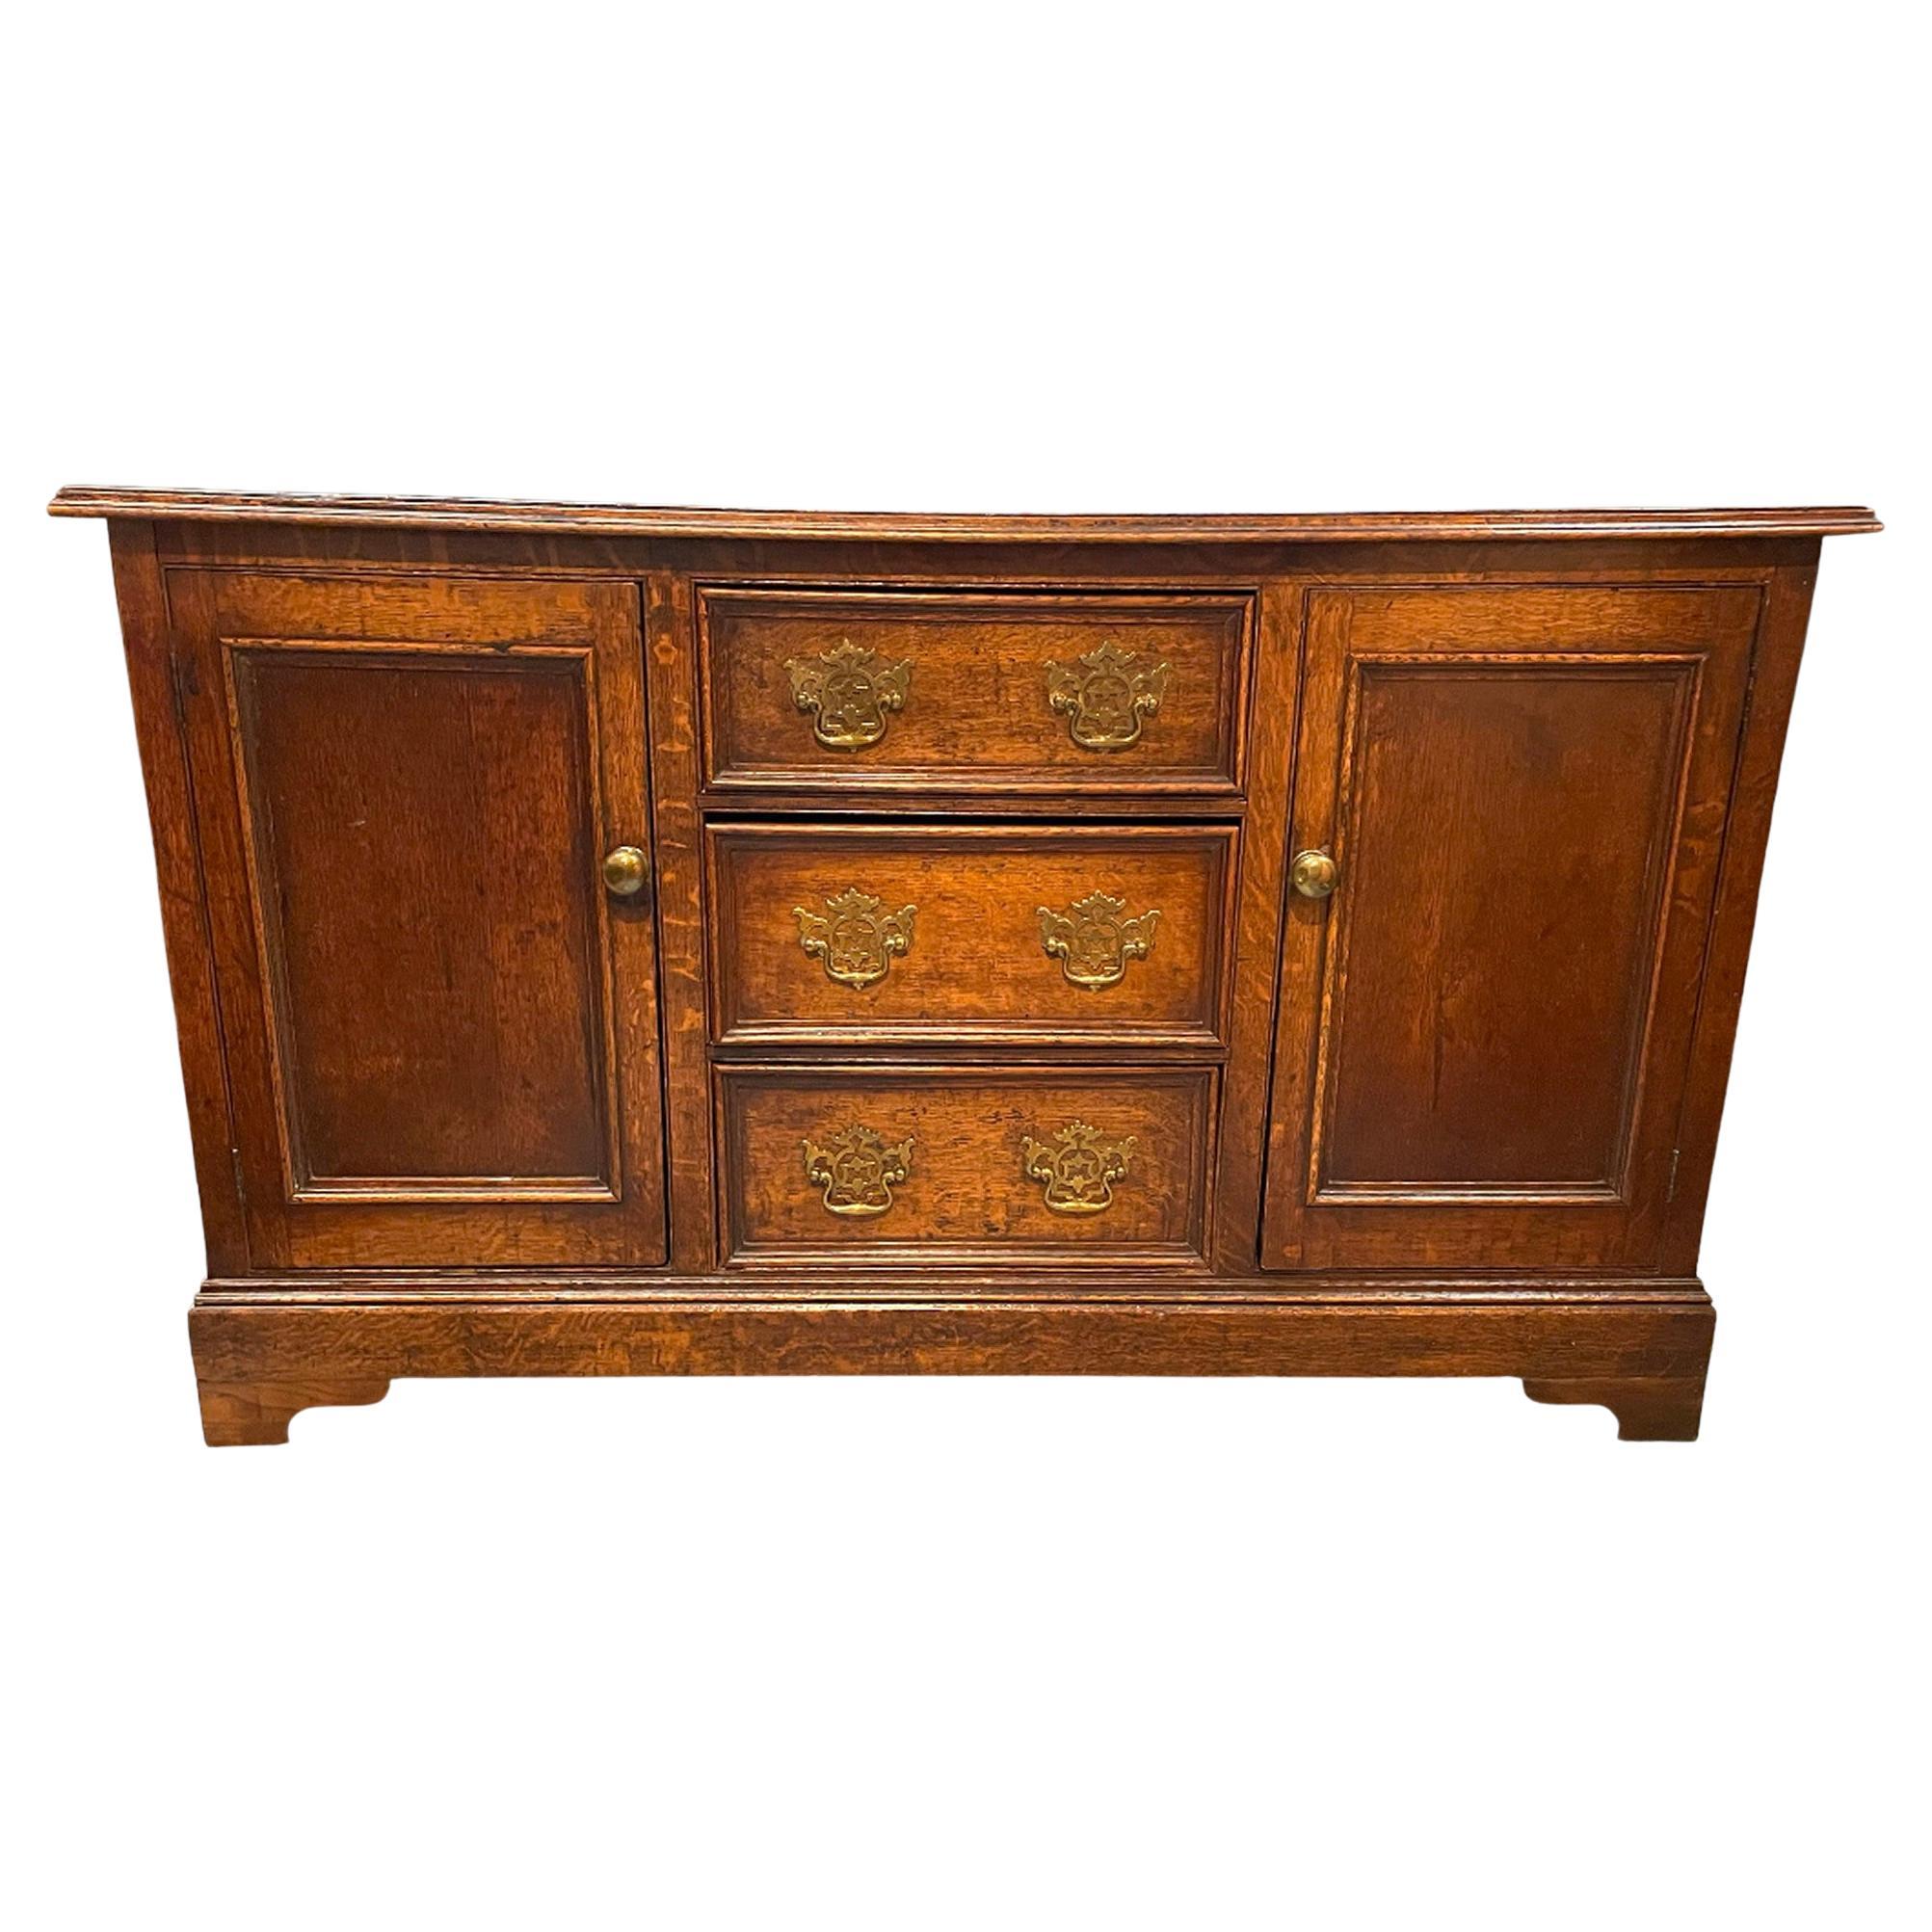 Early 19thc Medium Sized Oak Dresser